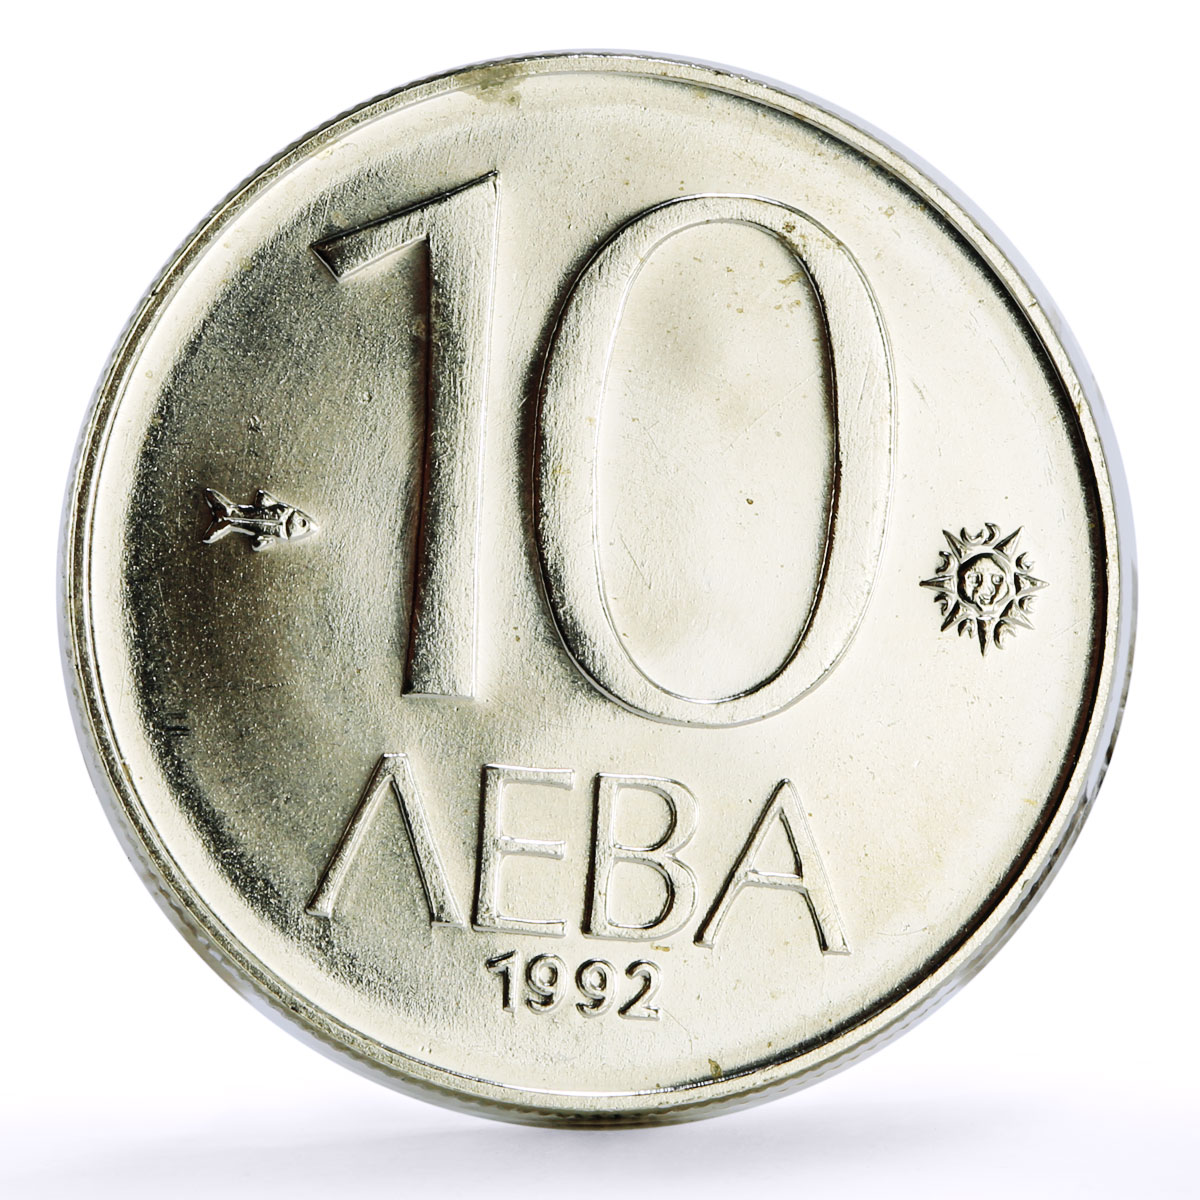 Bulgaria set of 3 coins Republic Coinage PROOF BU Krum CuNi coins 1989 - 1992